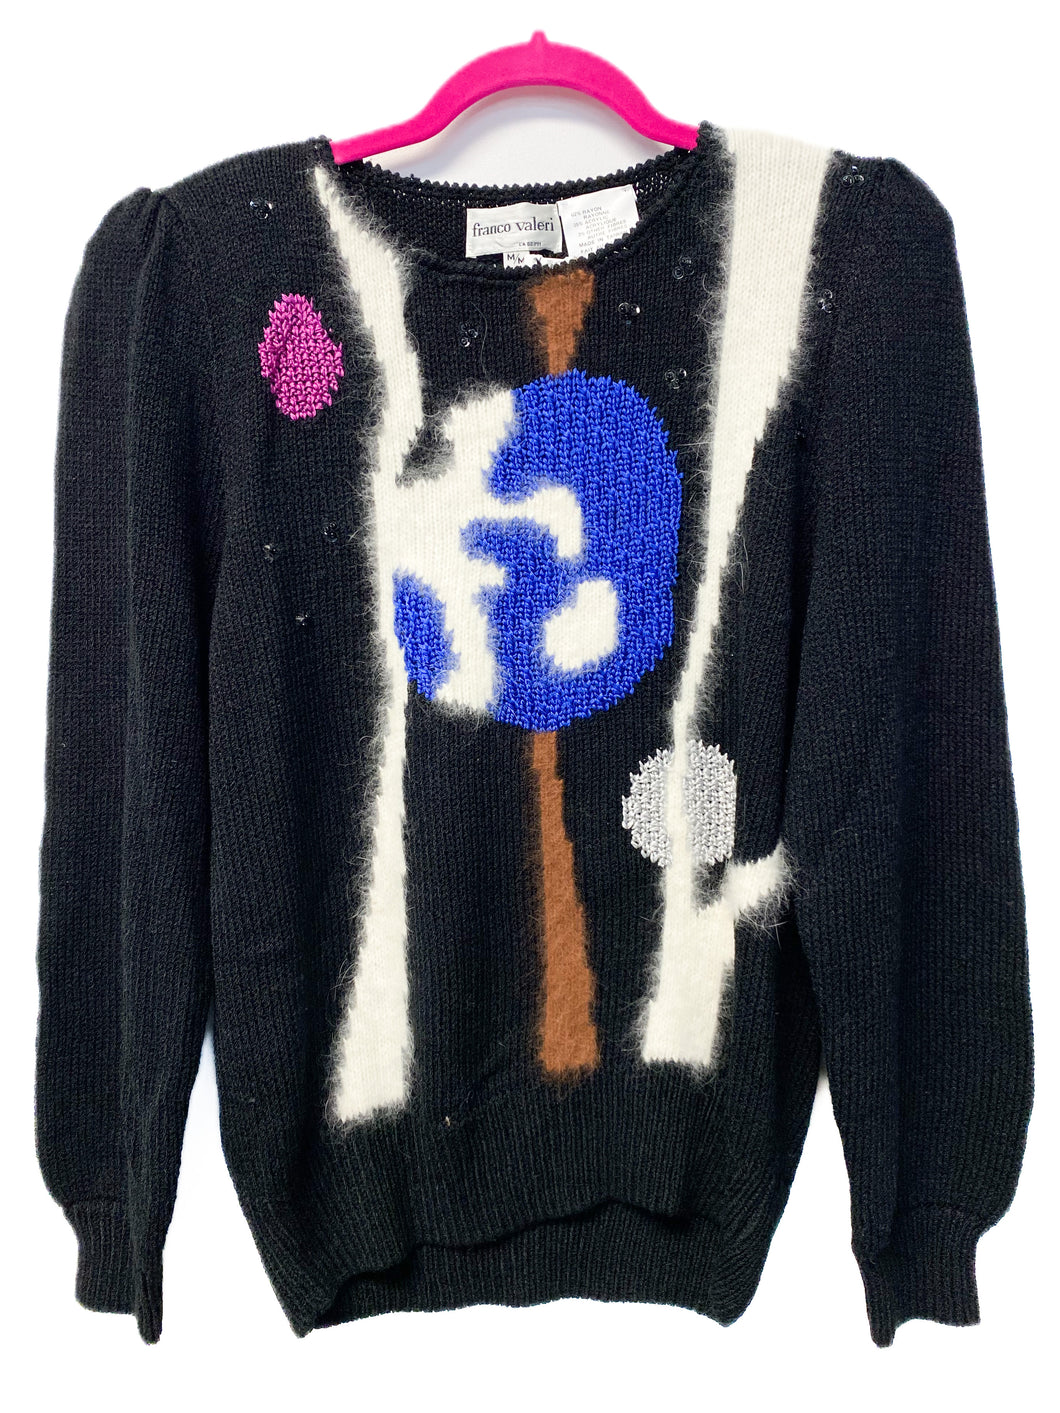 80's Franco Valeri Sweater (M)